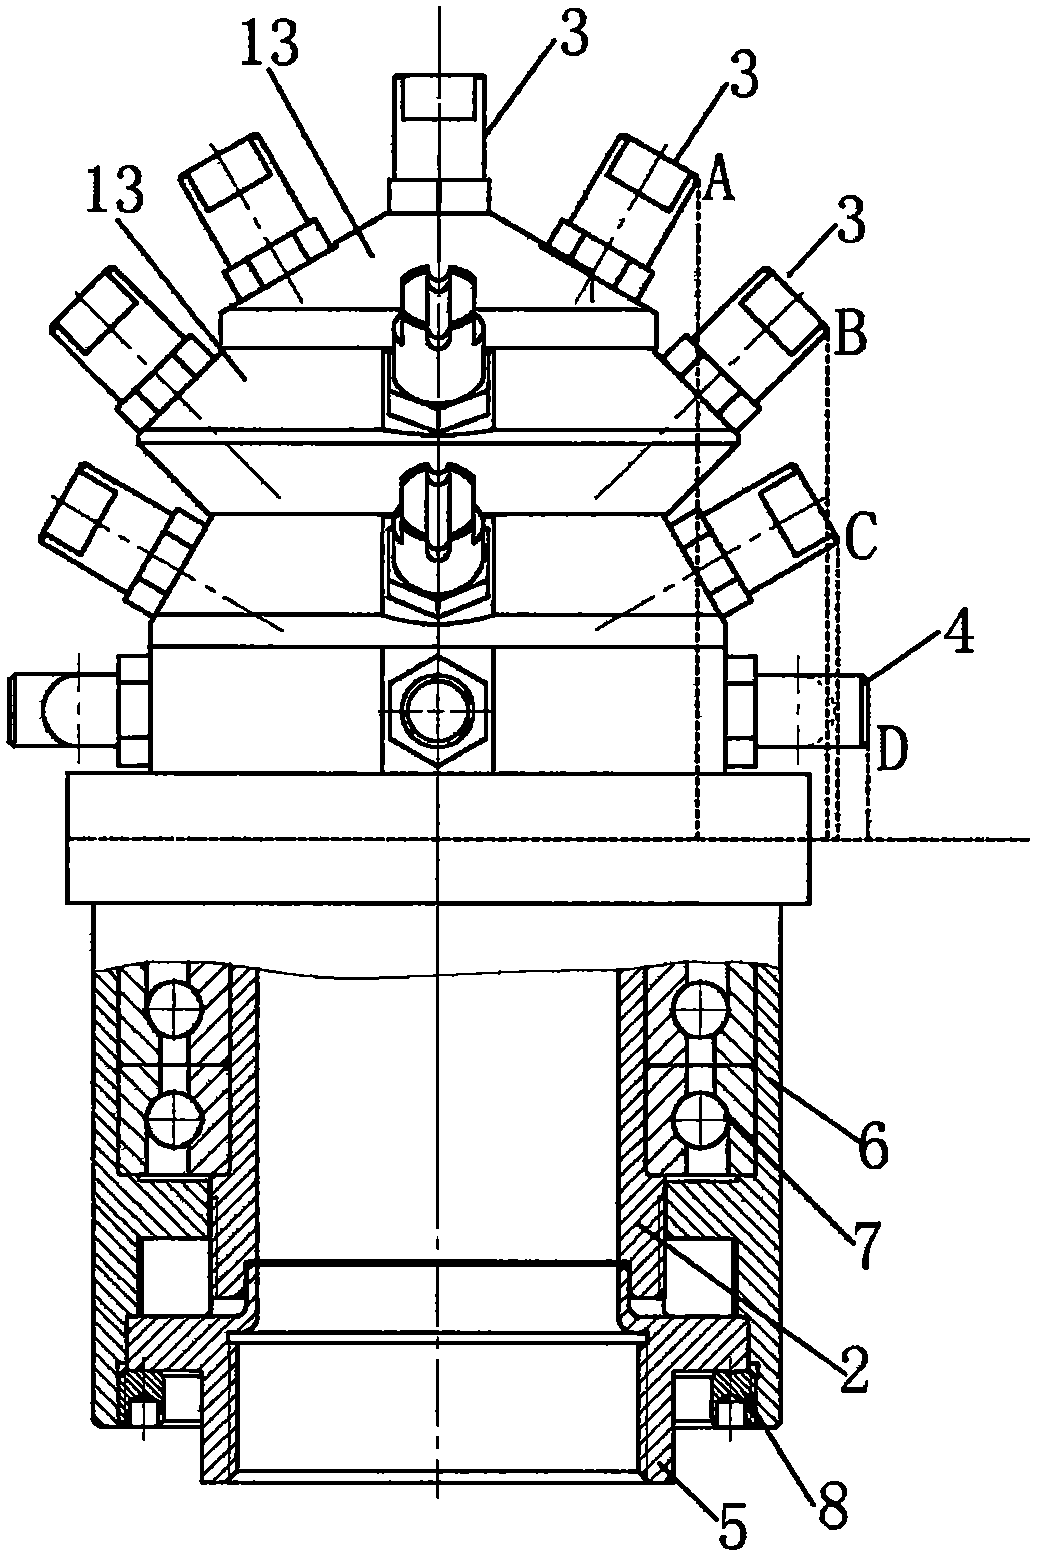 A multi-arm automatic rotary sprinkler